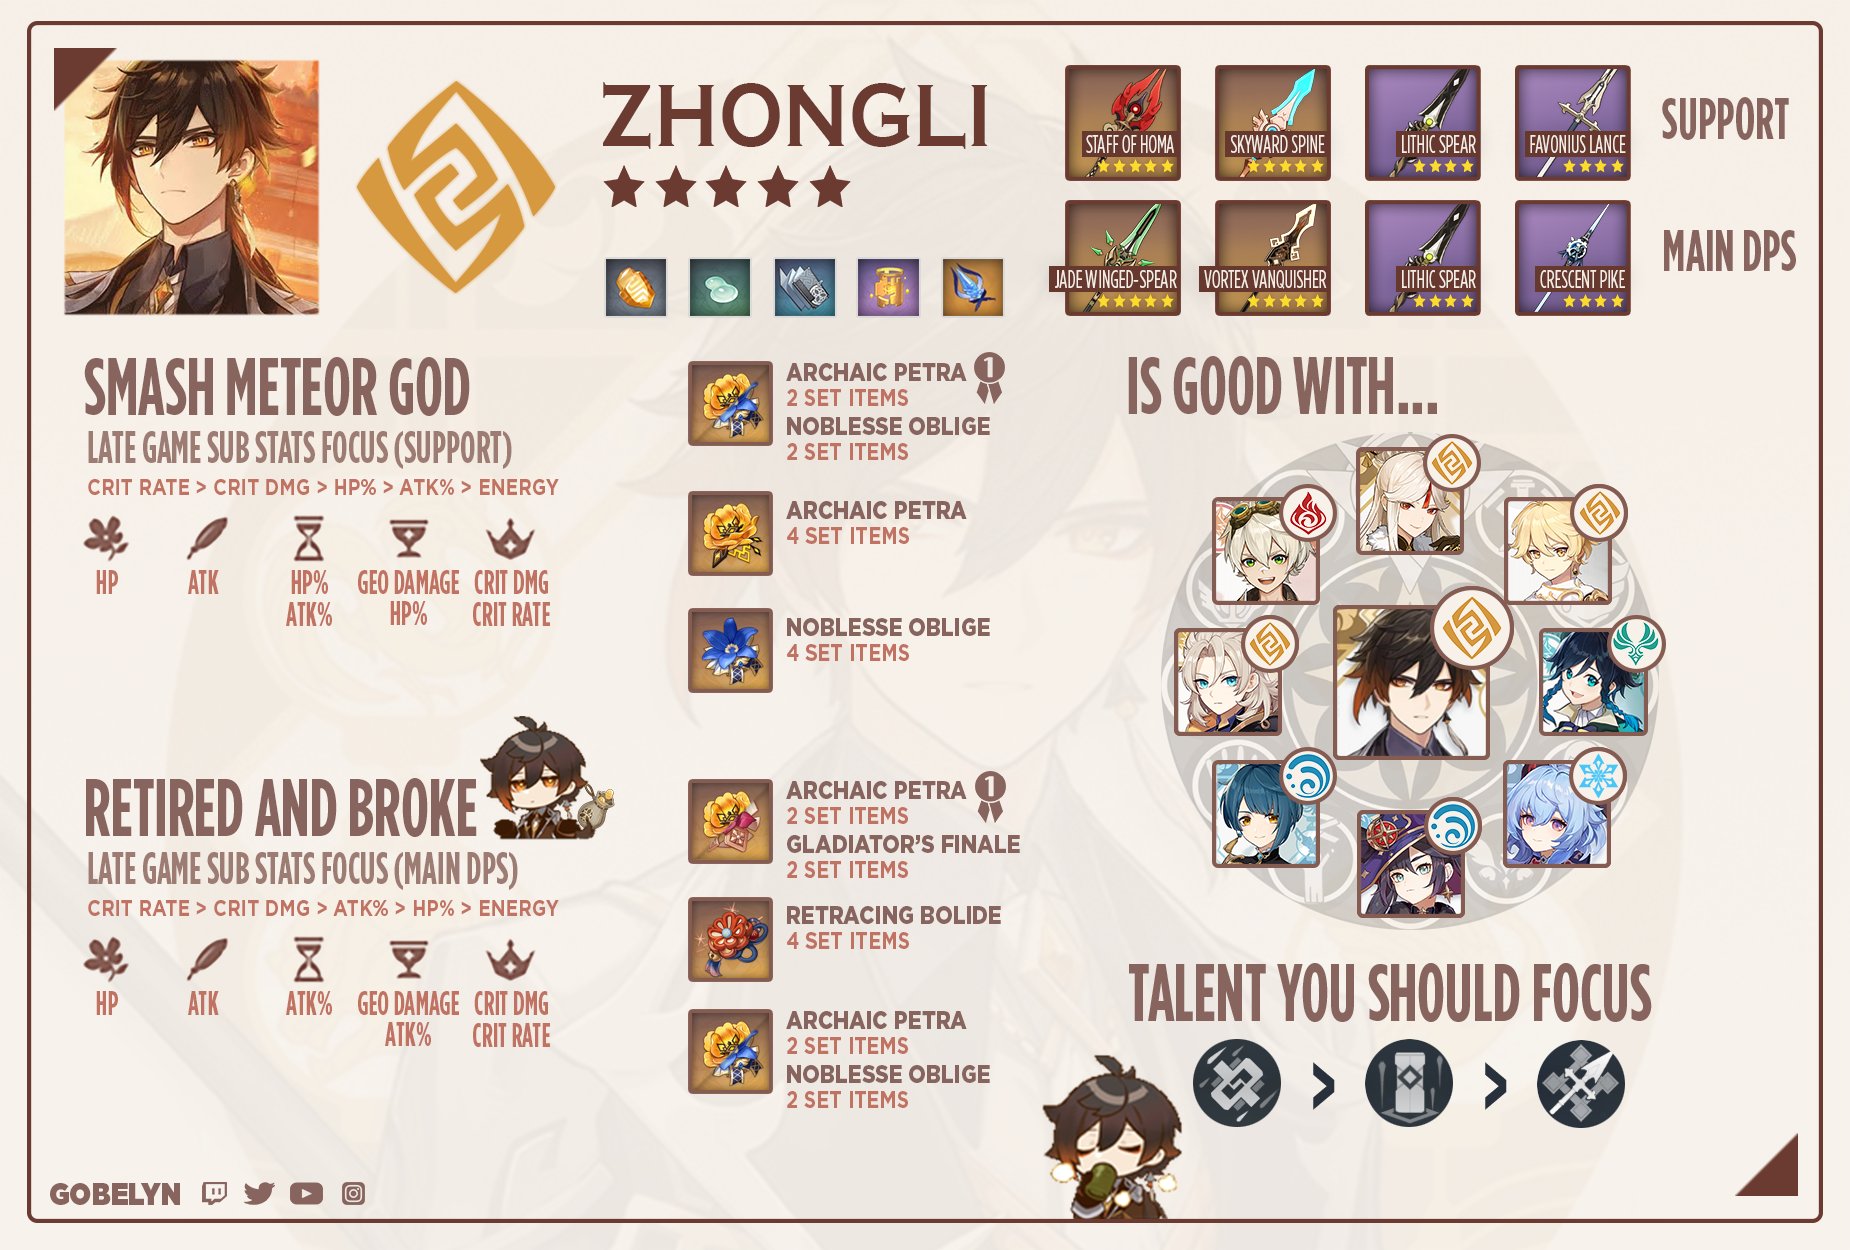 The best builds for Zhongli in Genshin Impact